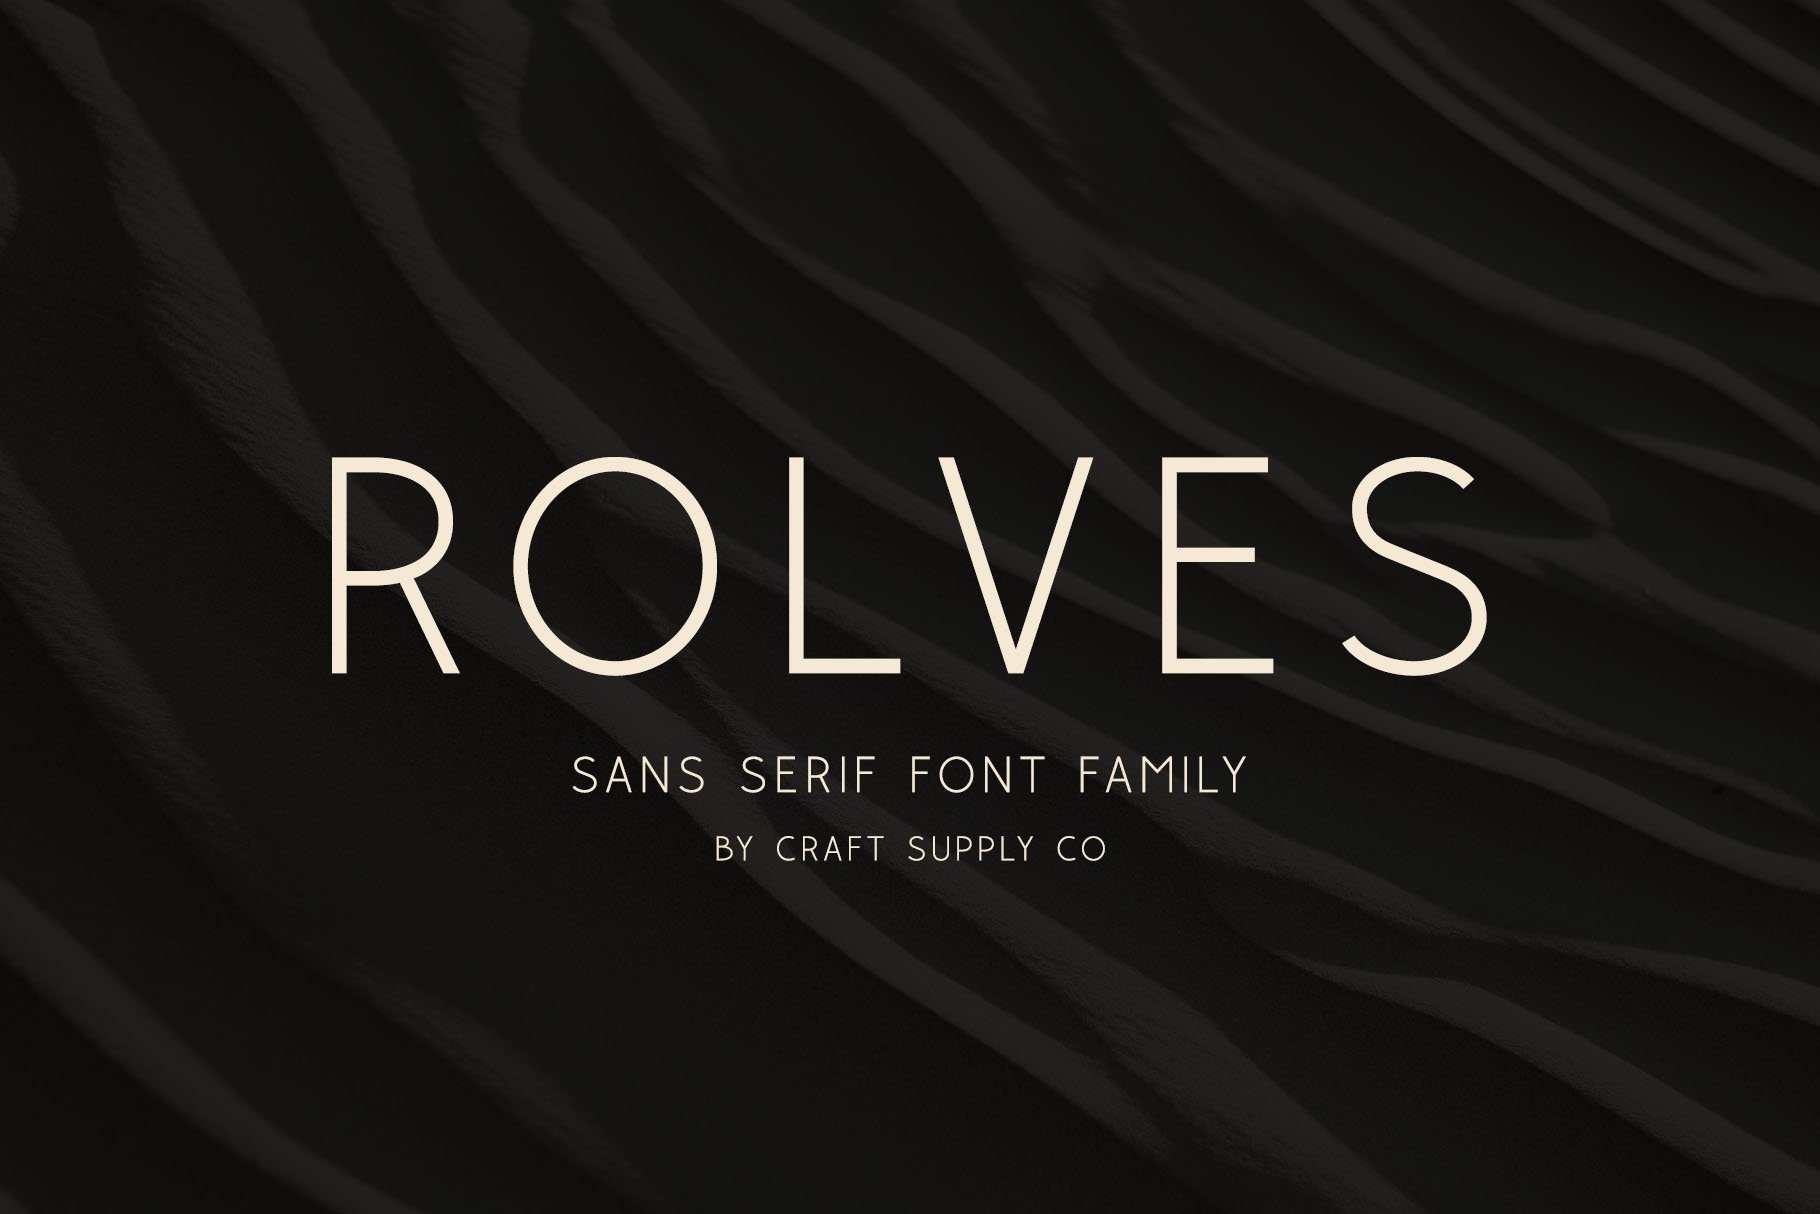 Rolves - Sans Serif Font Family cover image.